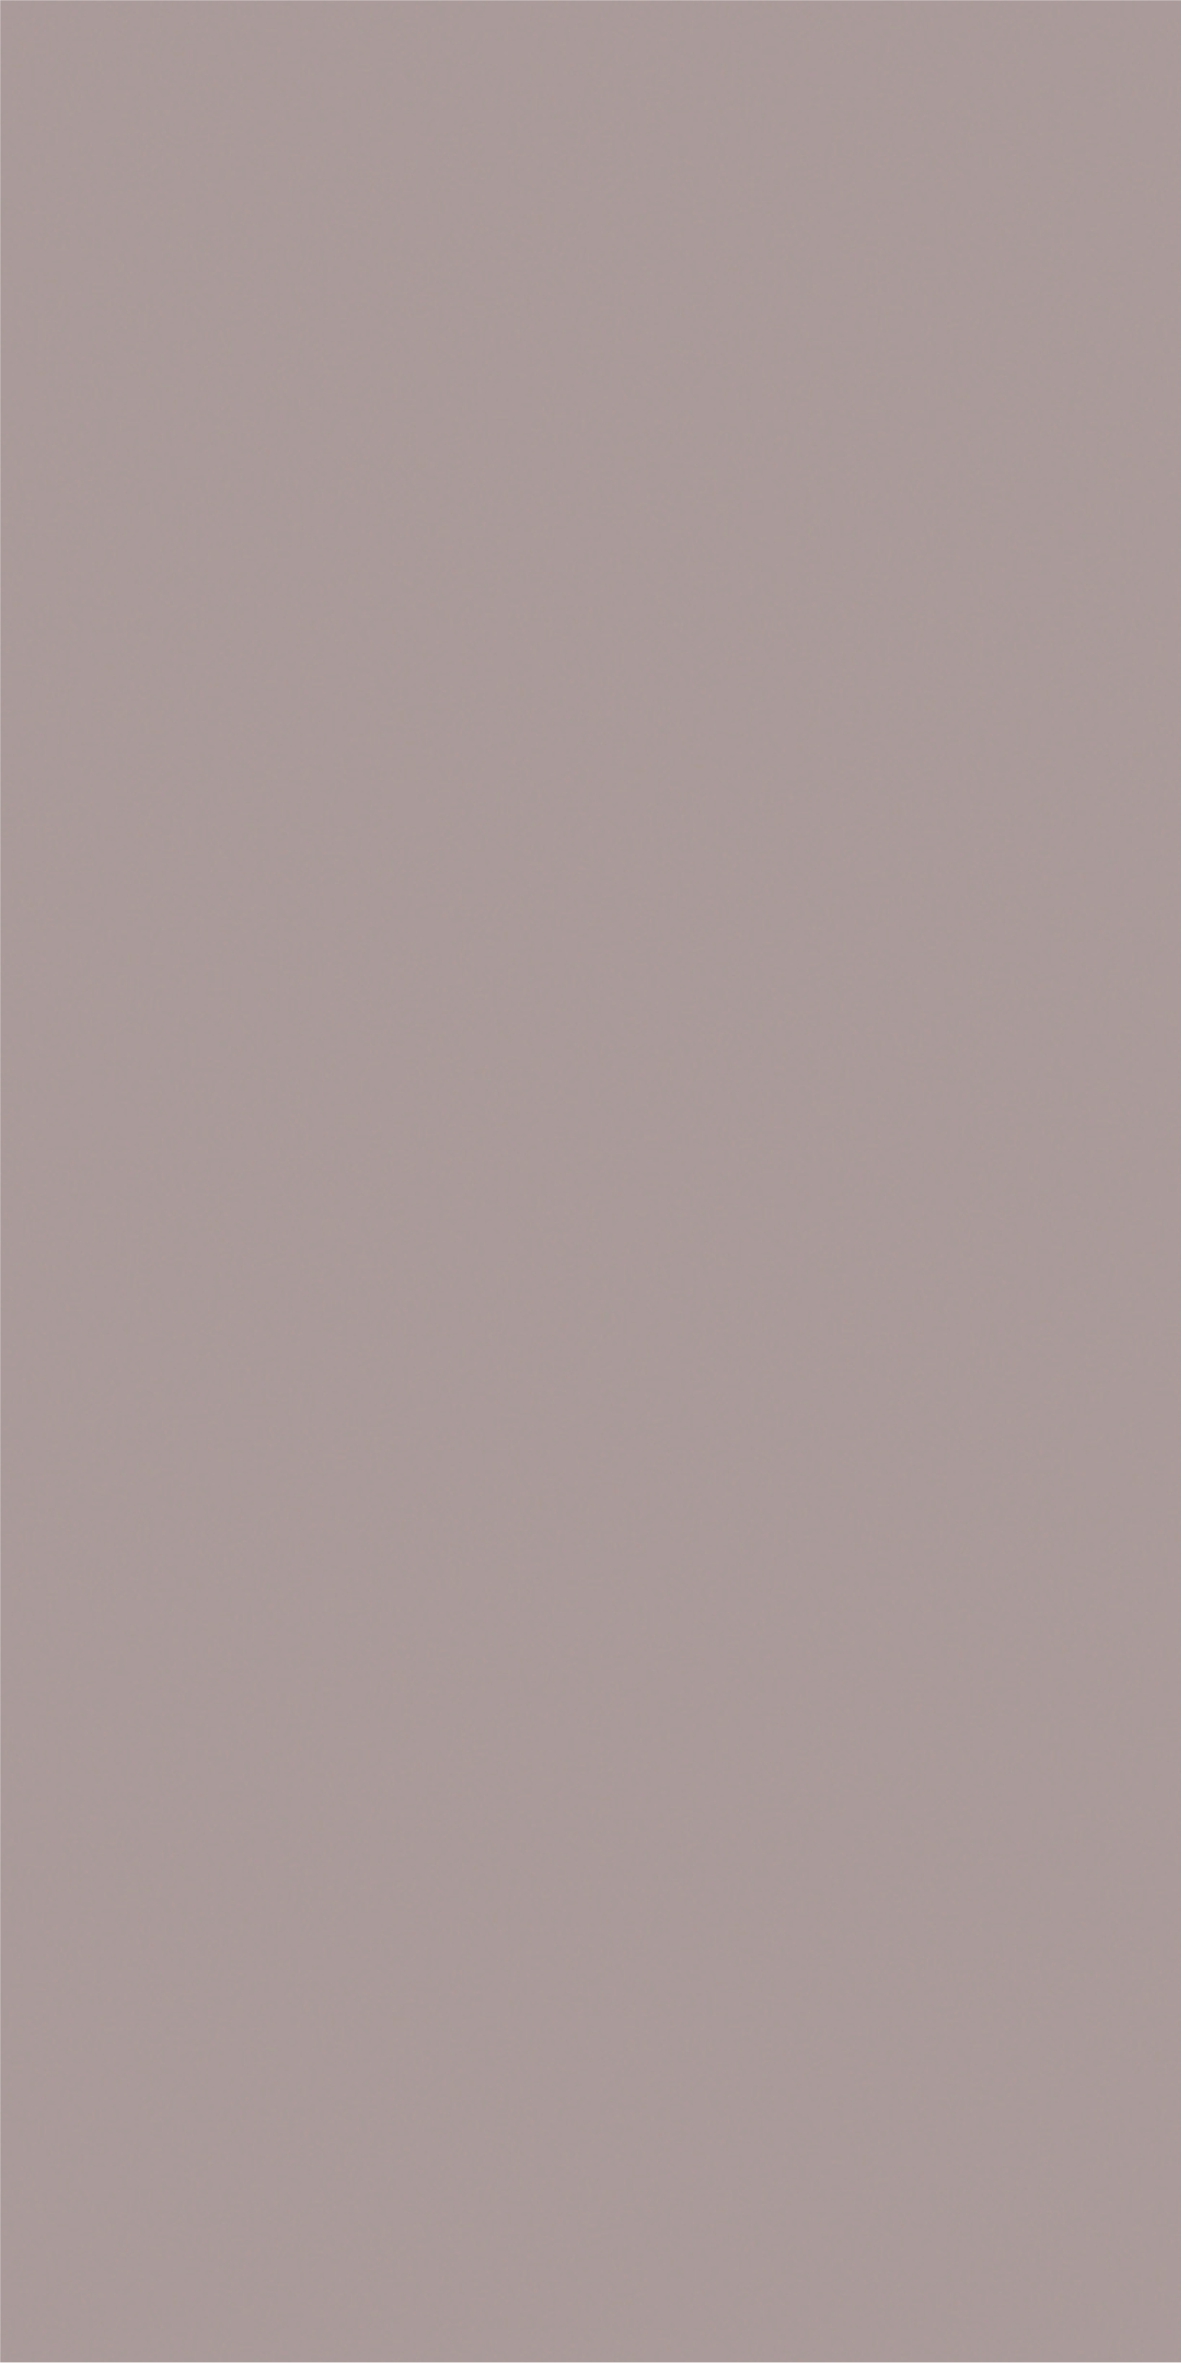  ЛДСП 2750-1830-16мм розовый жемчуг - P